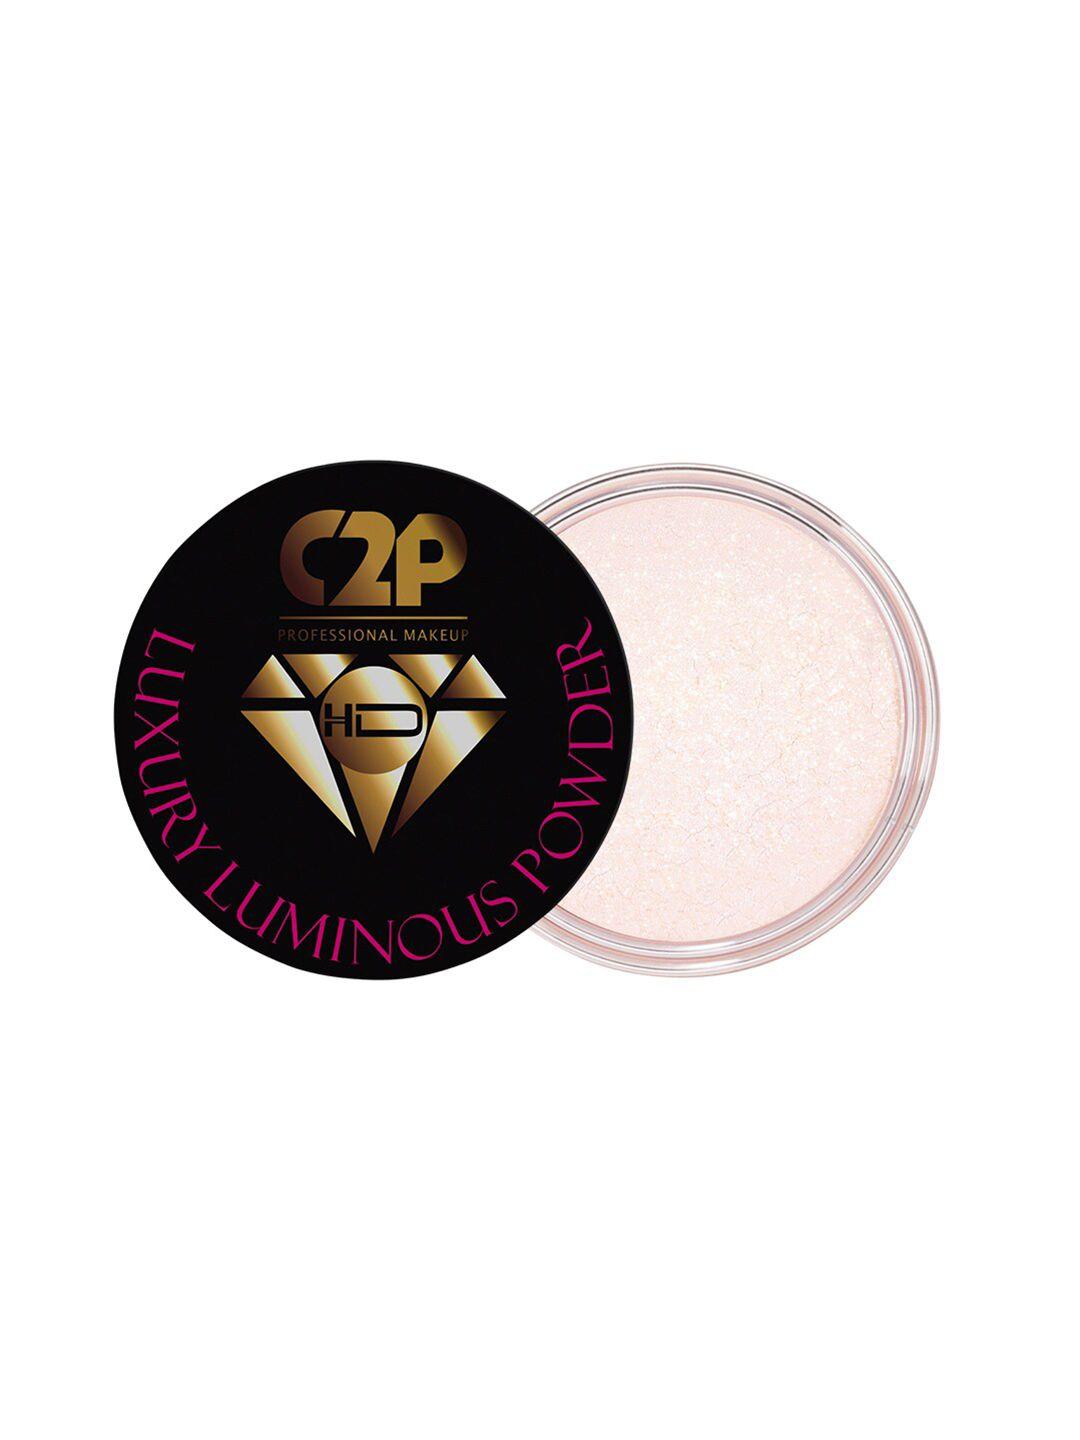 c2p professional makeup hd luxury luminous shimmer powder - nude 04